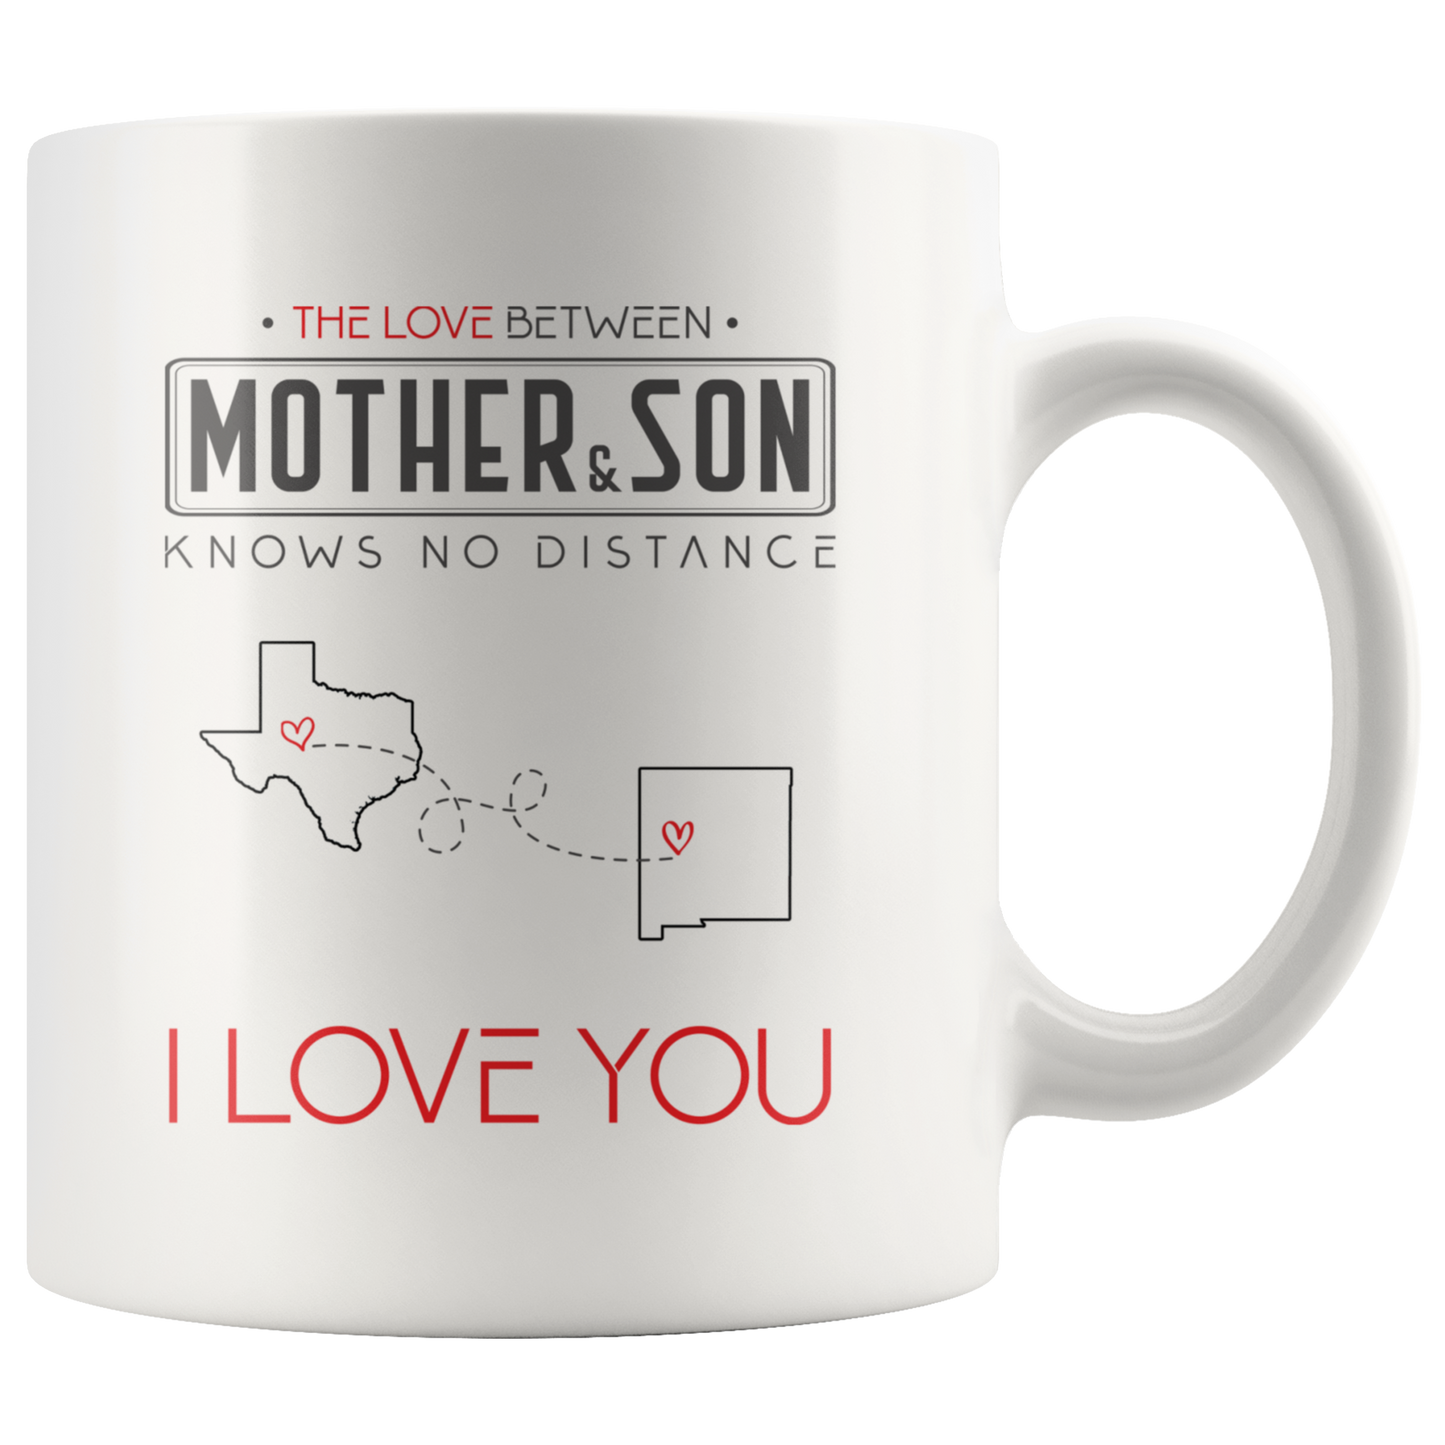 ND20430252-sp-24094 - [ Texas | New Mexico | 1 ]Christmas Mug Long Distance Mug Texas New Mexico - The Love